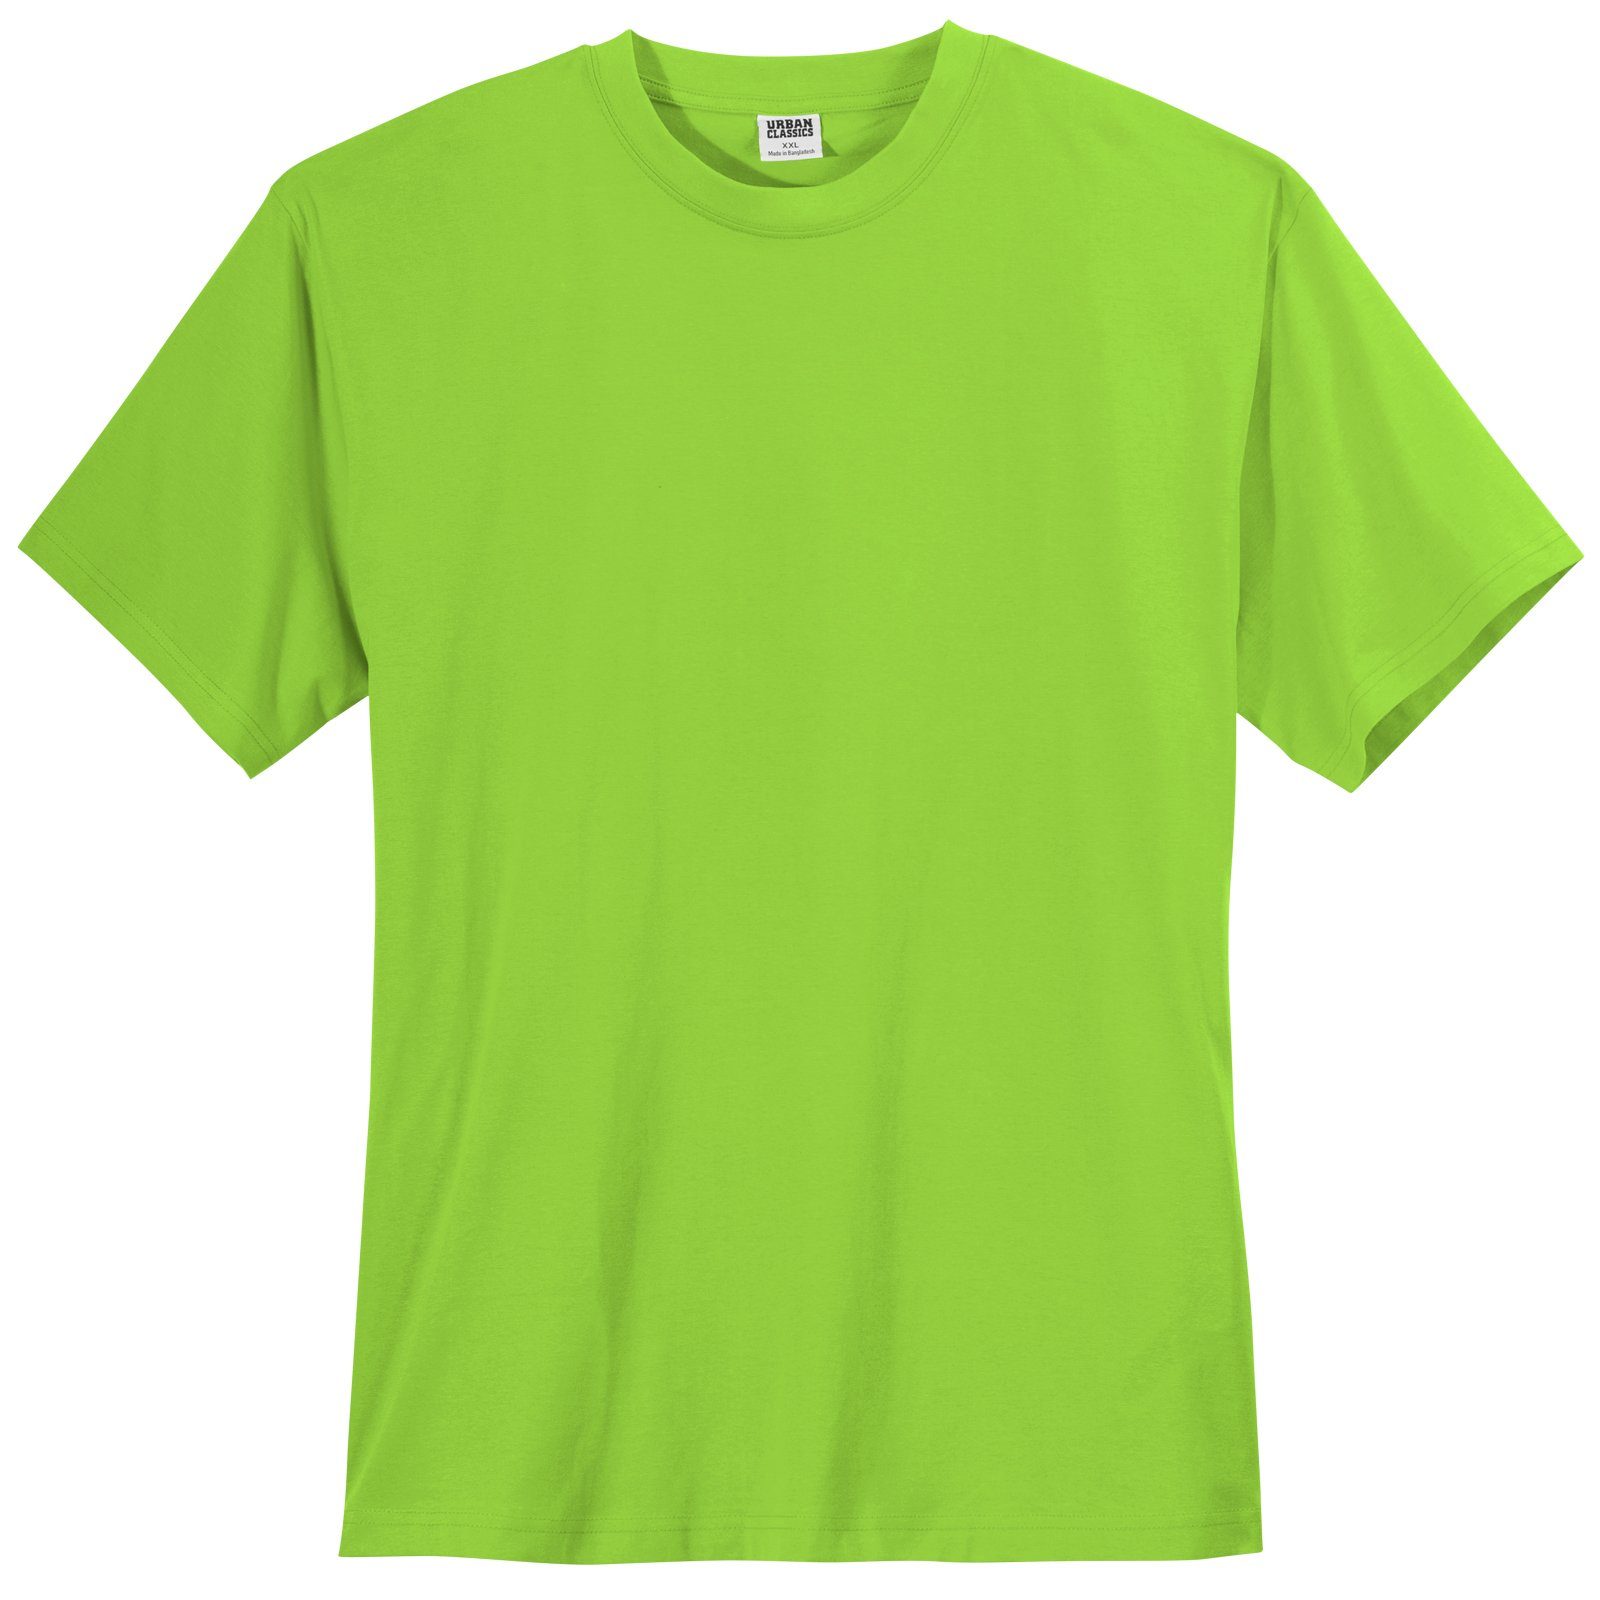 Urban Classics Plus Size Rundhalsshirt Übergrößen T-Shirt hellgrün Urban Classics